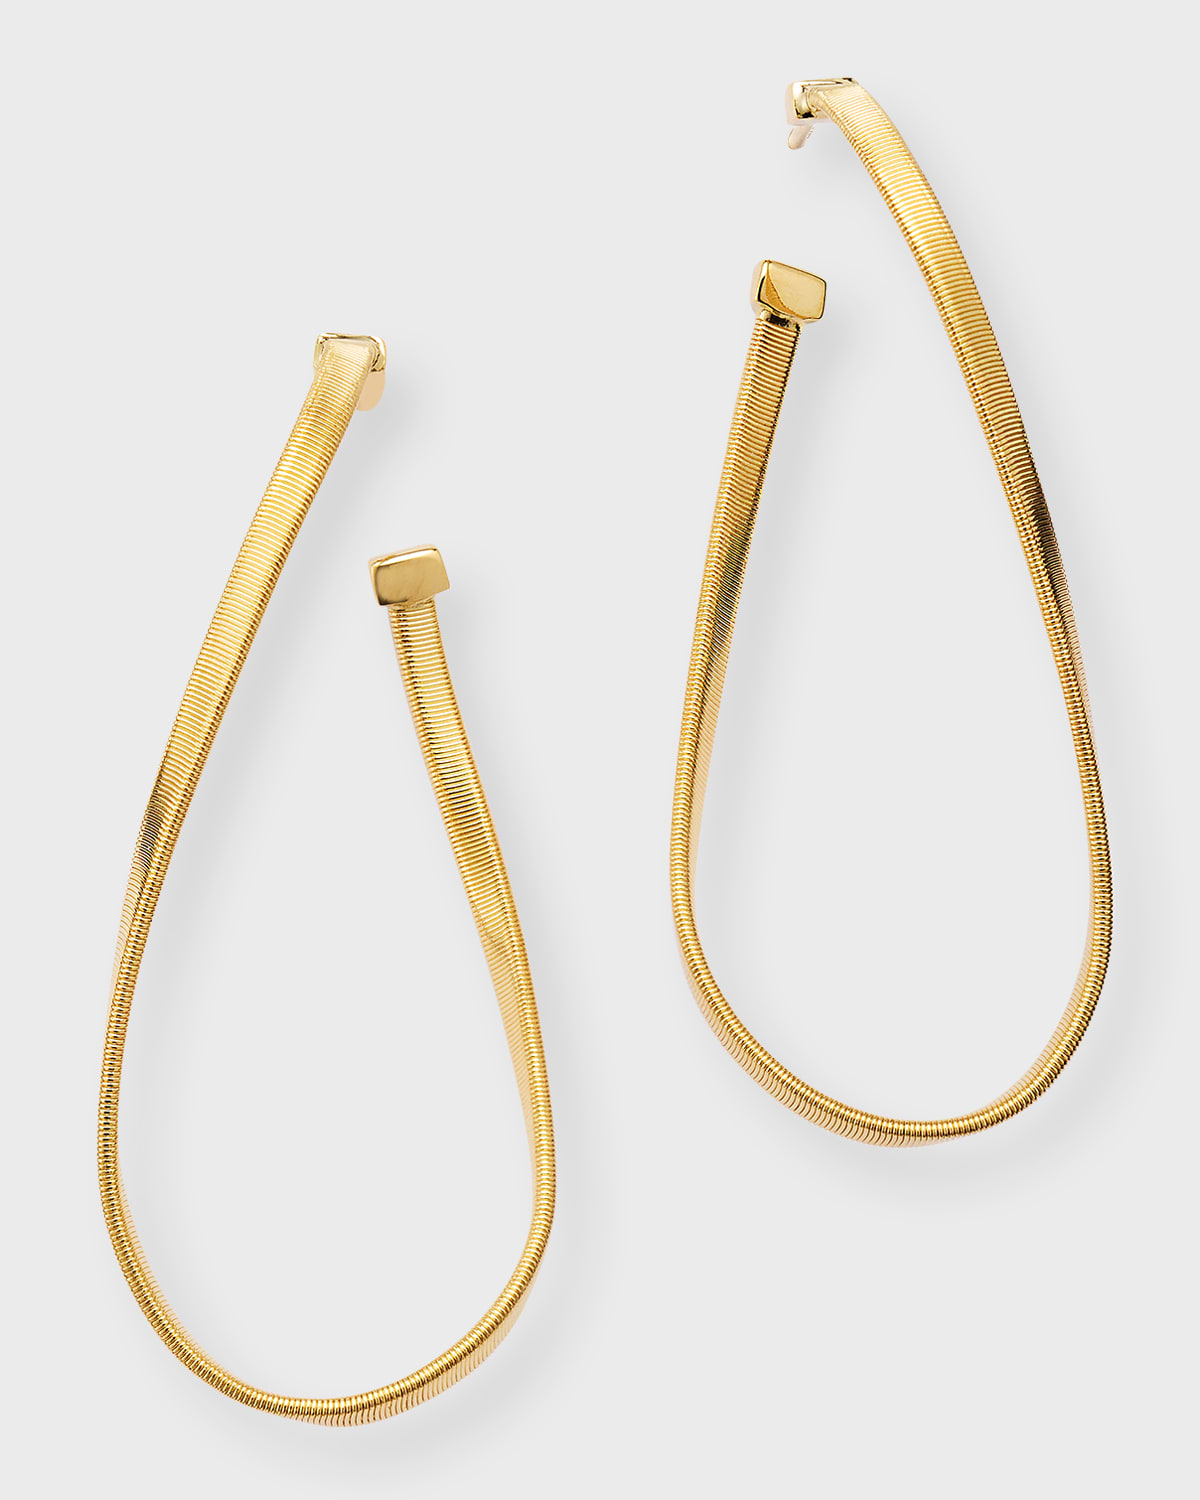 Marco Bicego 18k Gold Marrakech Large Twisted Hoop Earrings